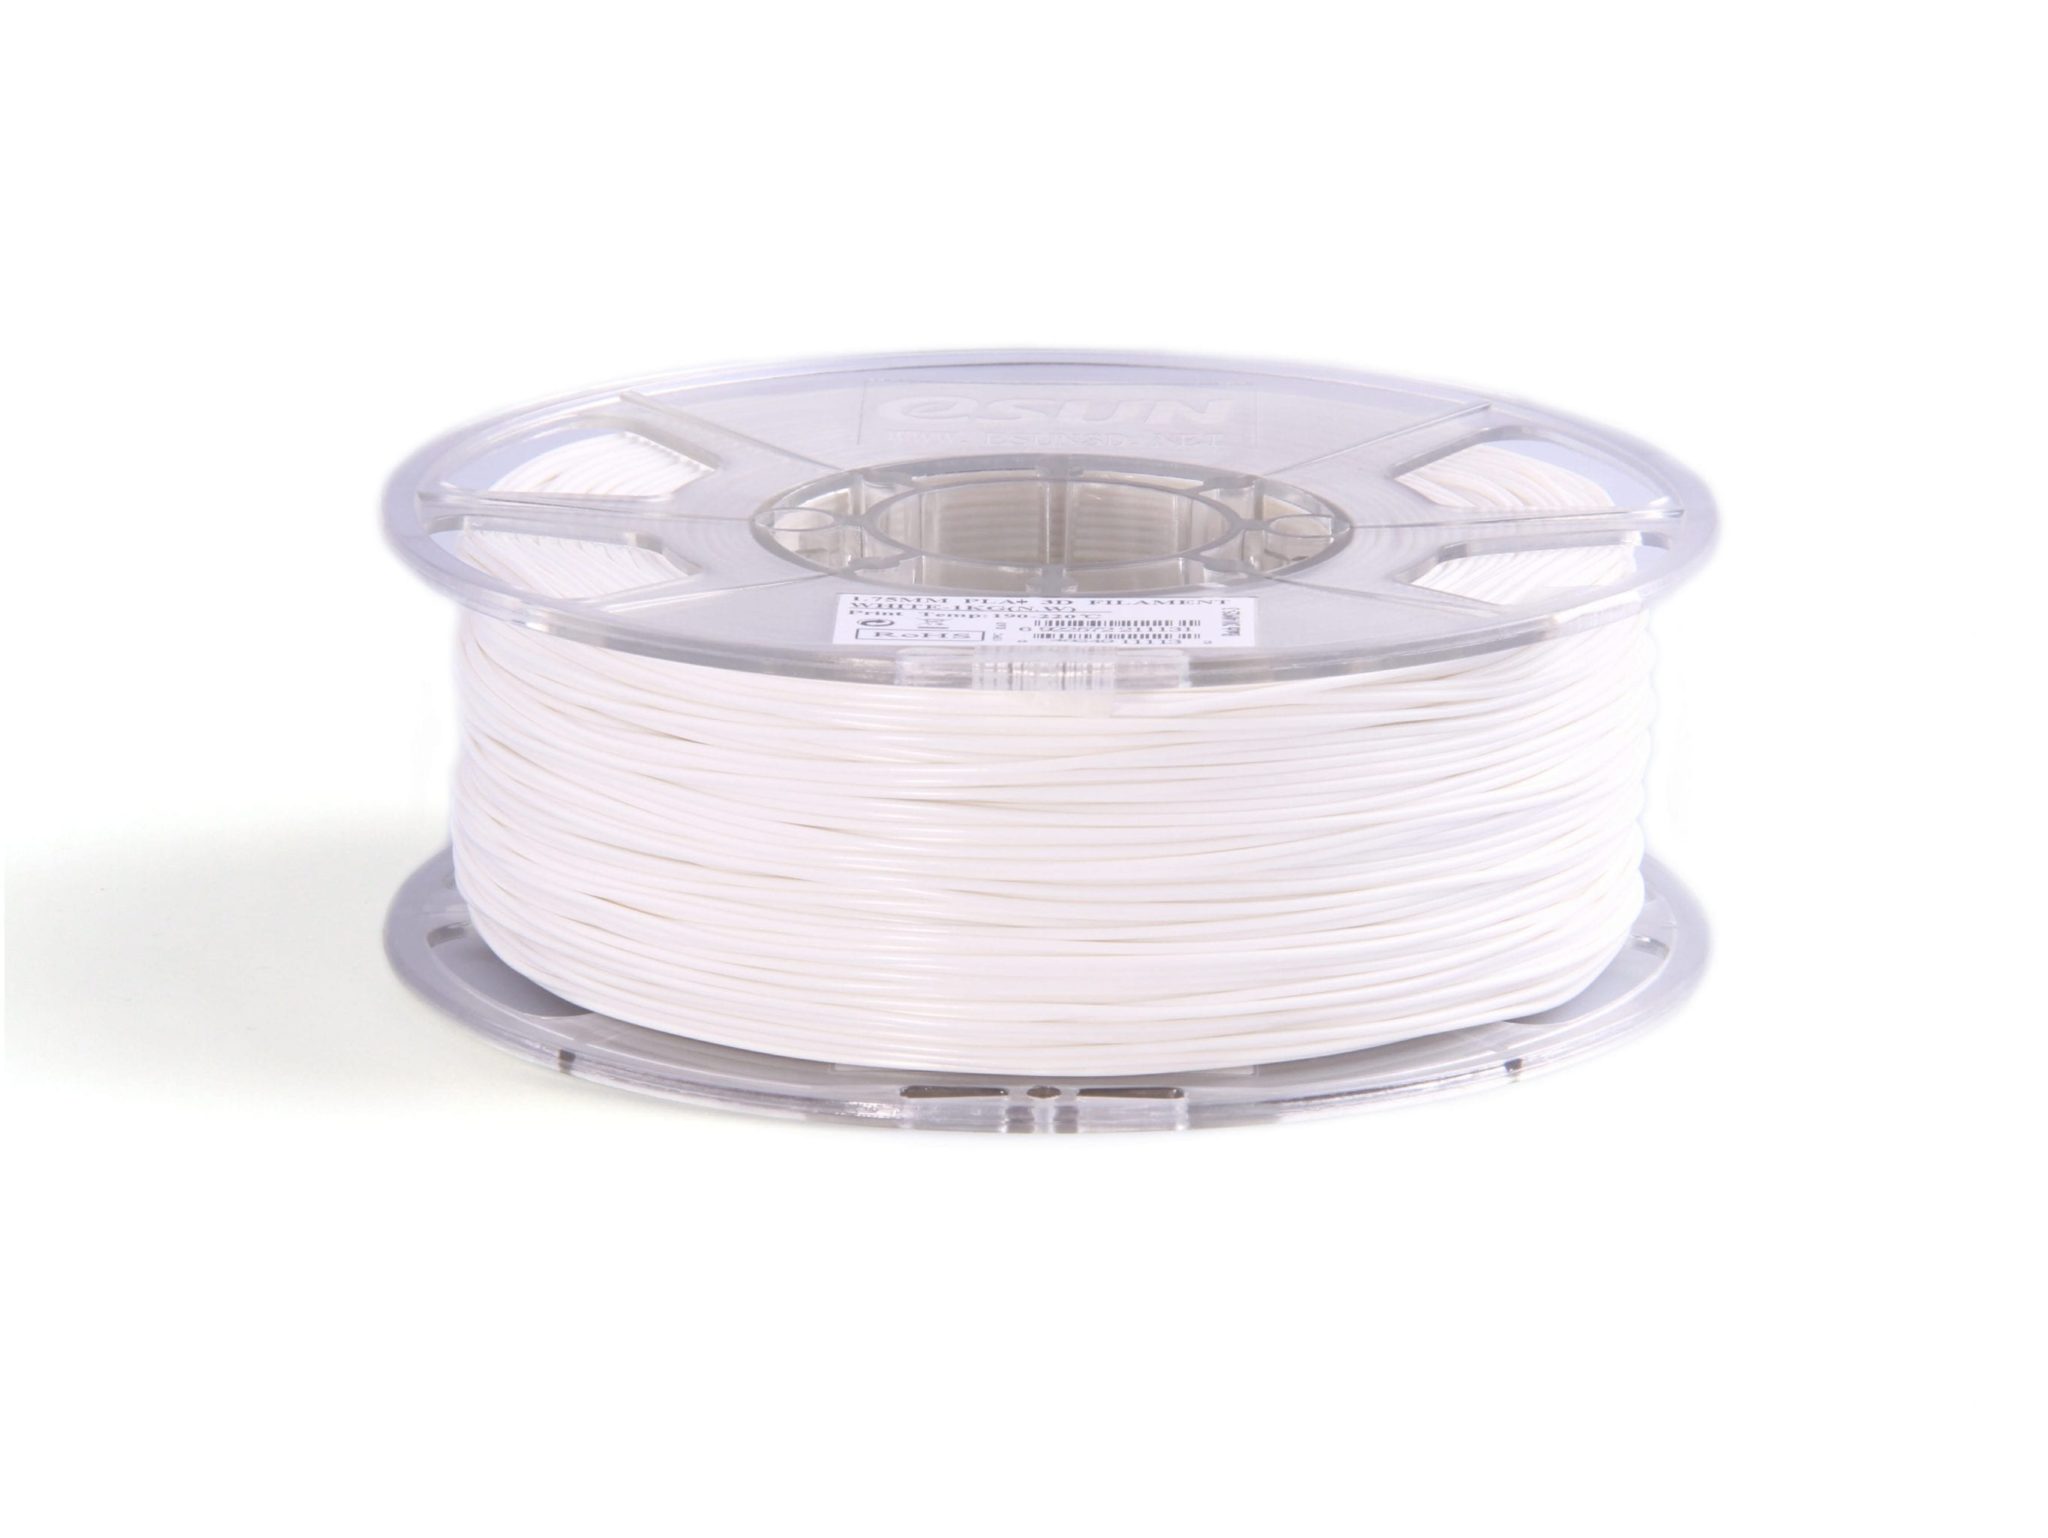 eSun 1.75mm PLA+ White Filament - 1kg Spool - Solarbotics Ltd.